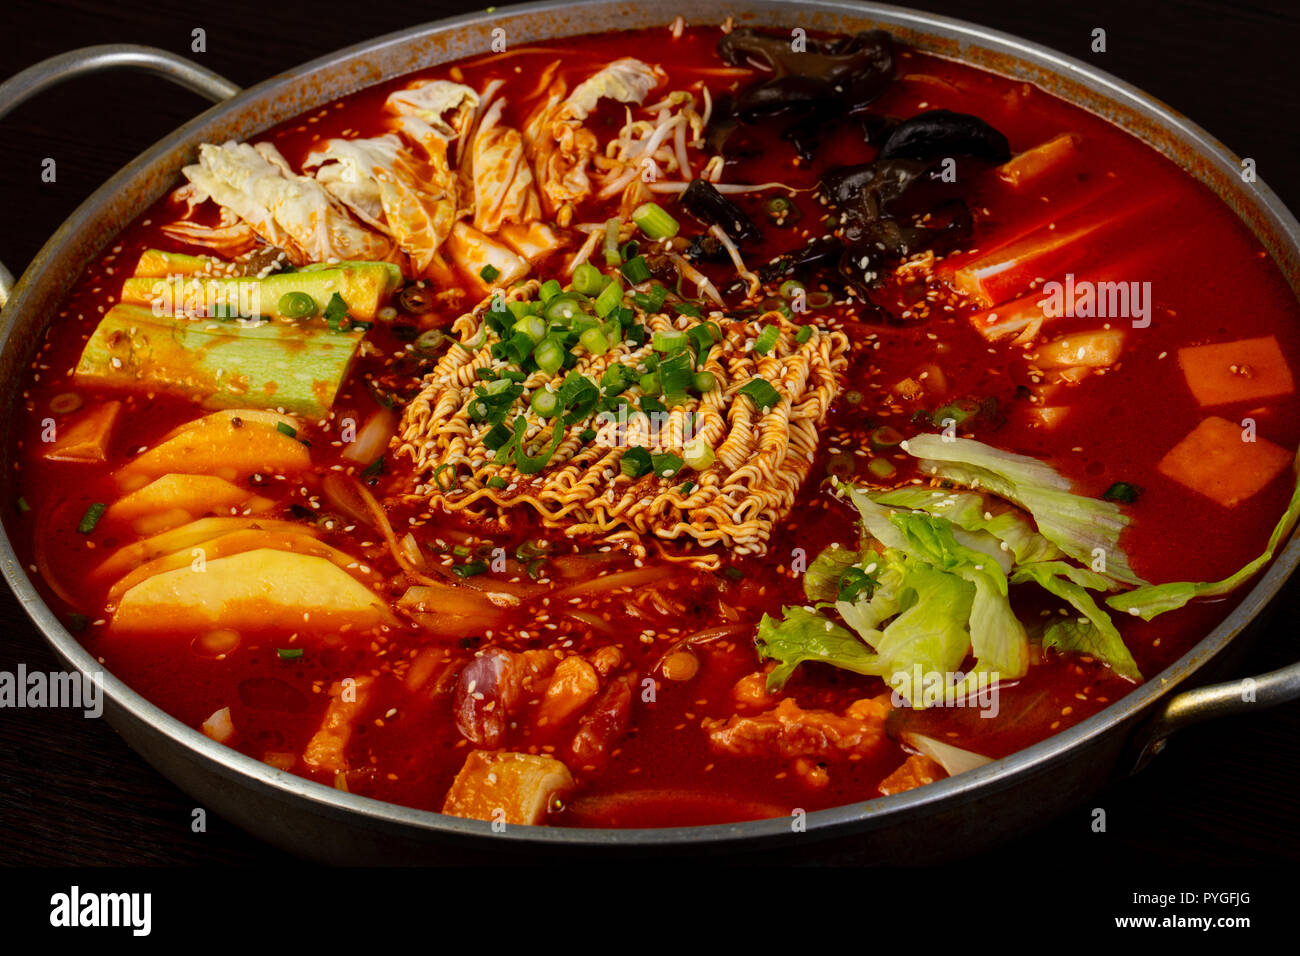 https://c8.alamy.com/comp/PYGFJG/korean-cuisine-hot-pot-with-meat-and-seafood-PYGFJG.jpg